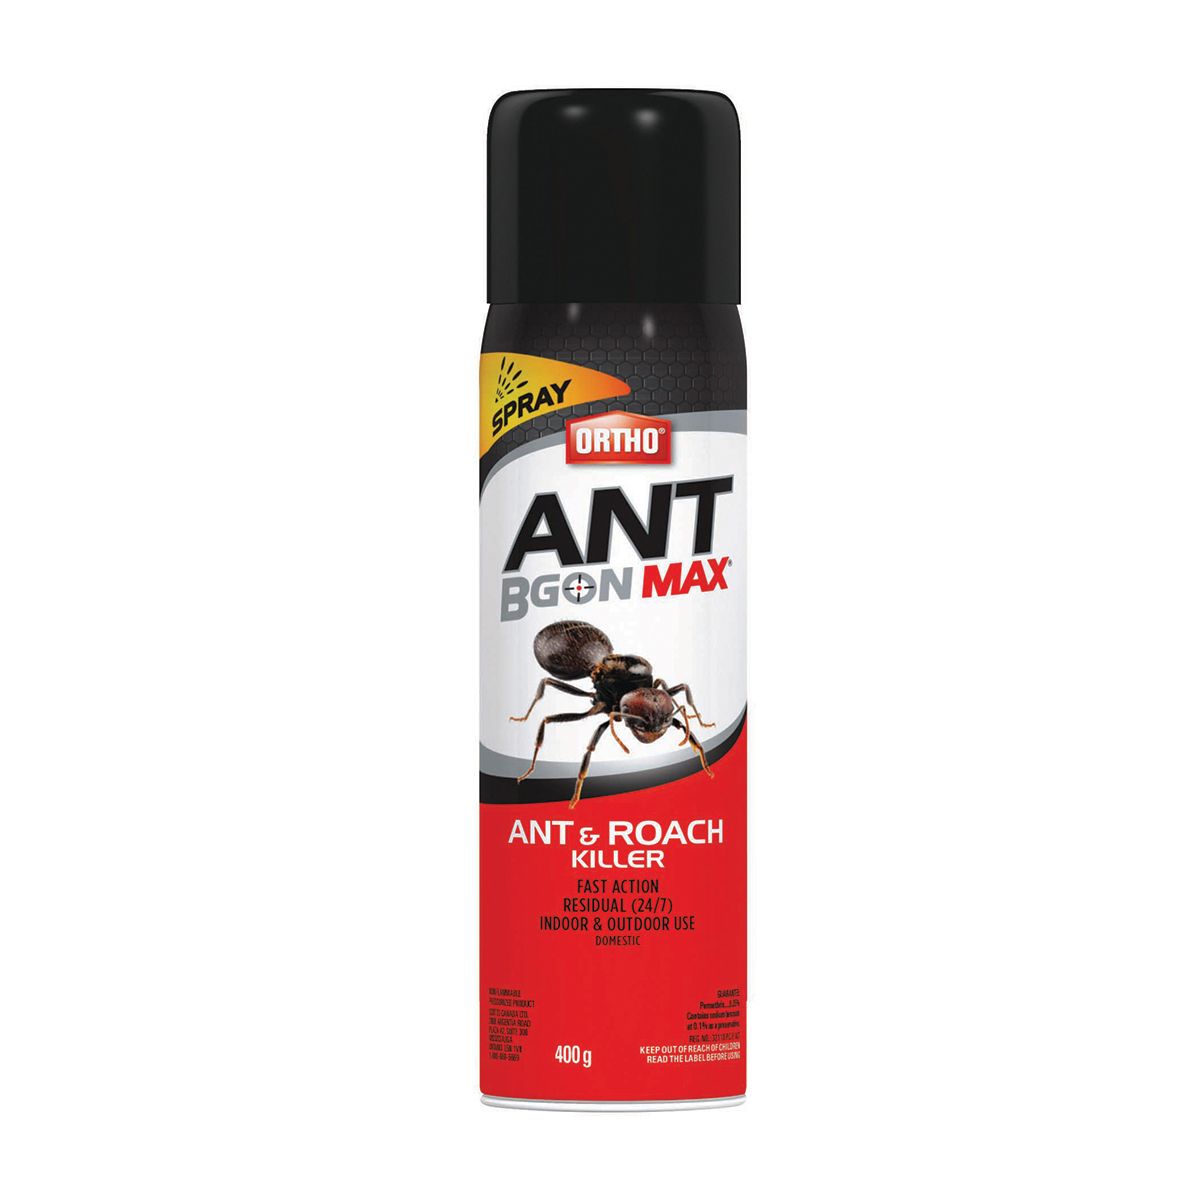 Aérosol anti-fourmis - Ant Bgon Max 400G